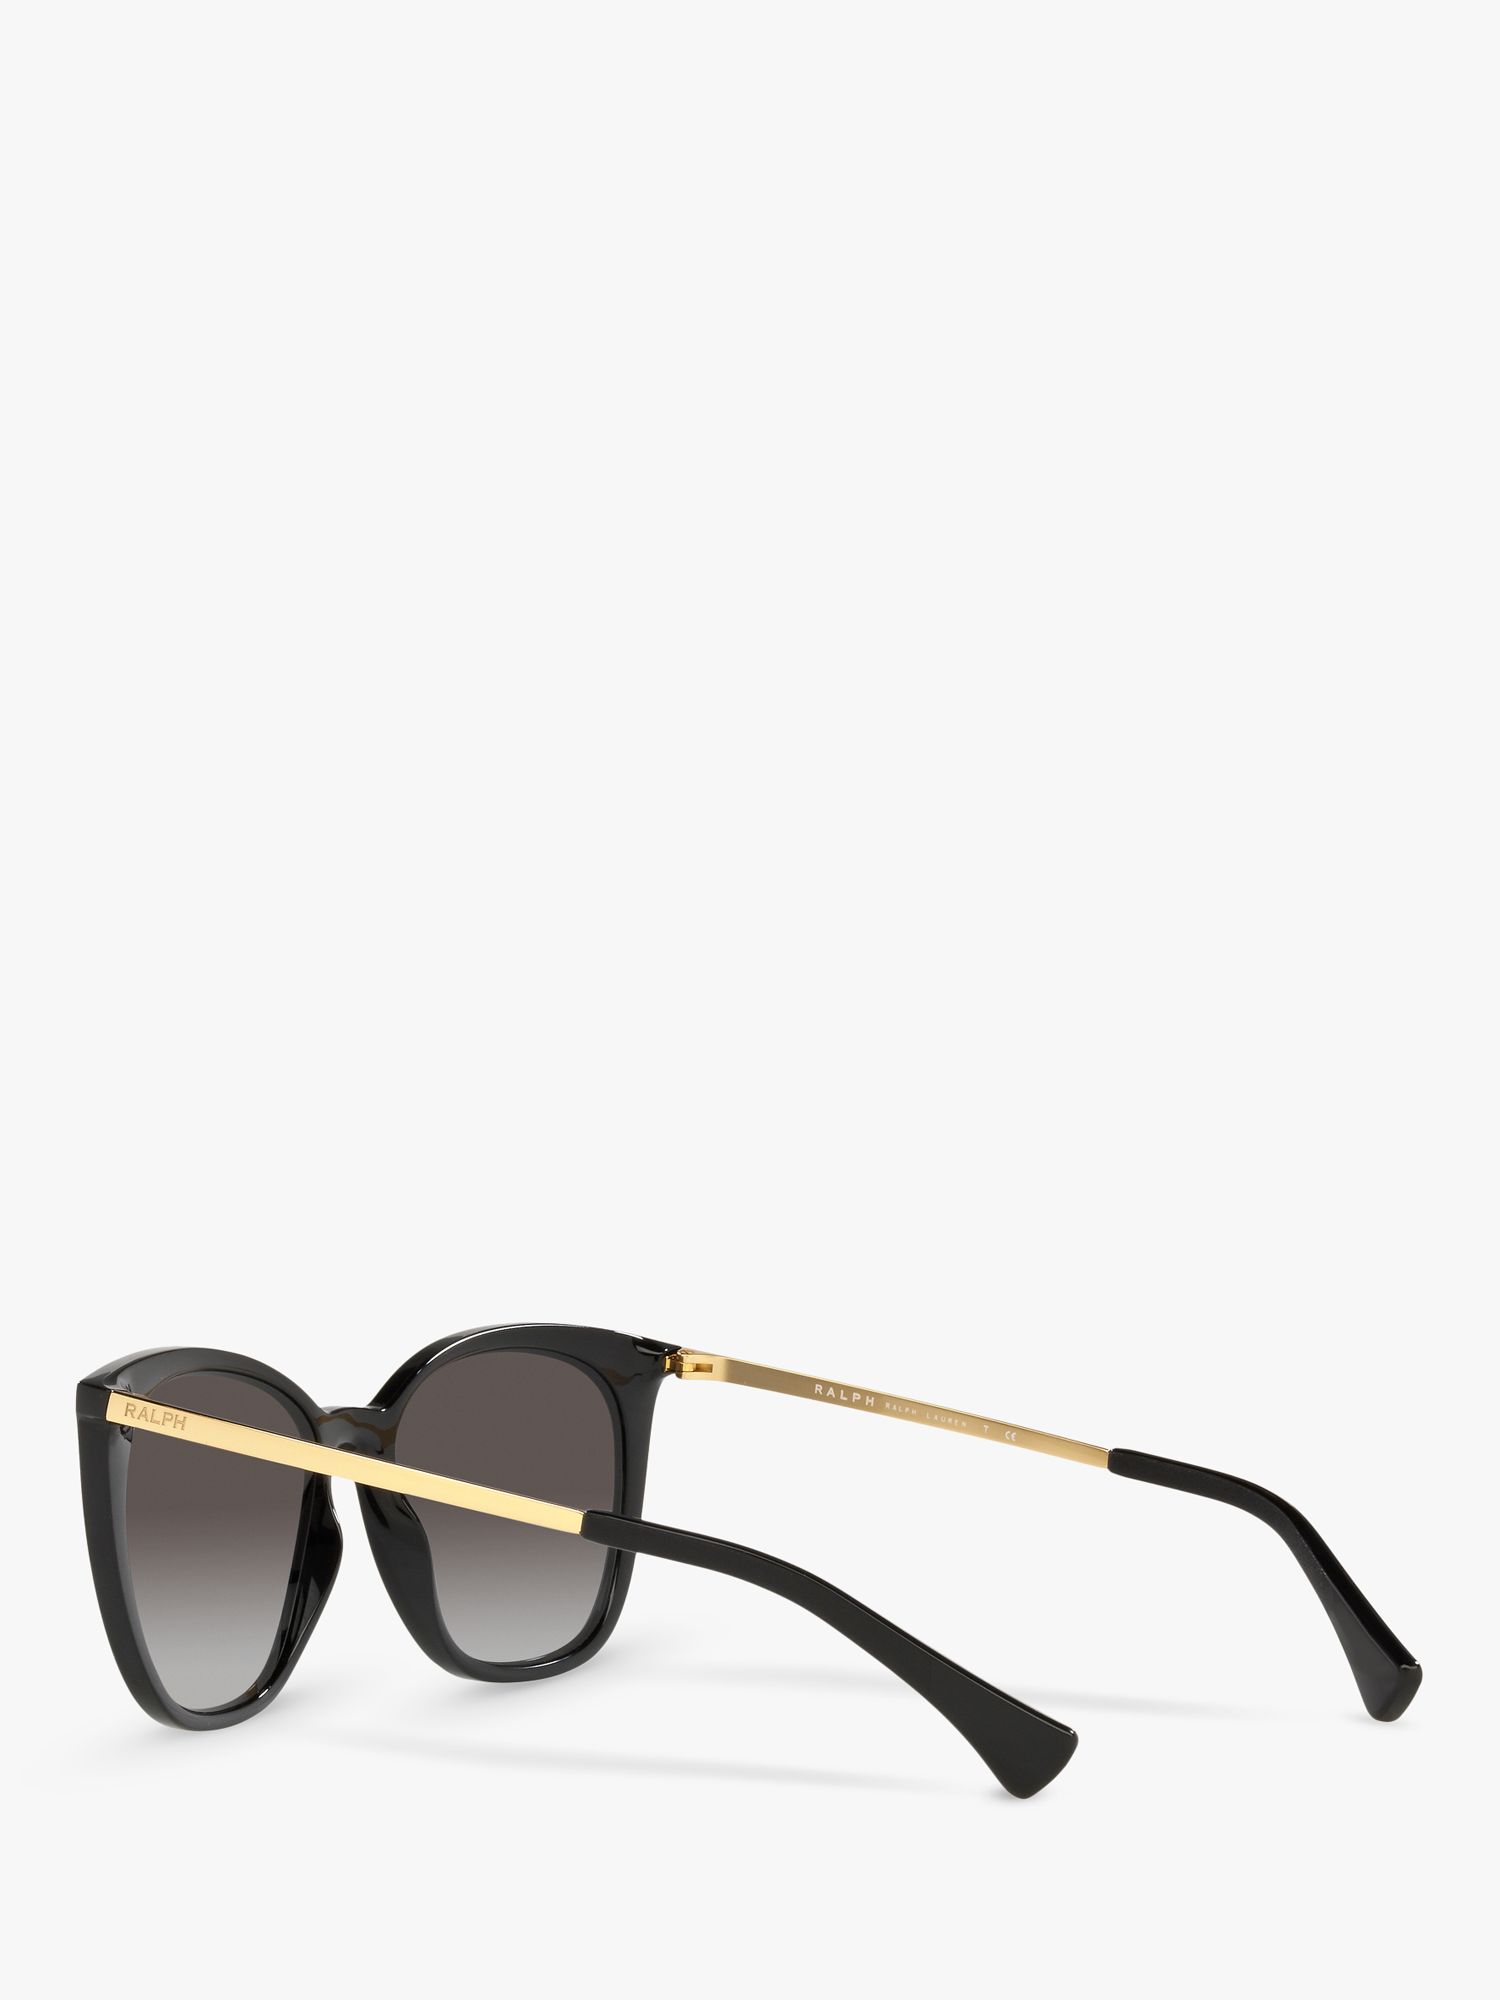 Ralph RA5280 Women's Cat's Eye Sunglasses, Shiny Black/Grey Gradient